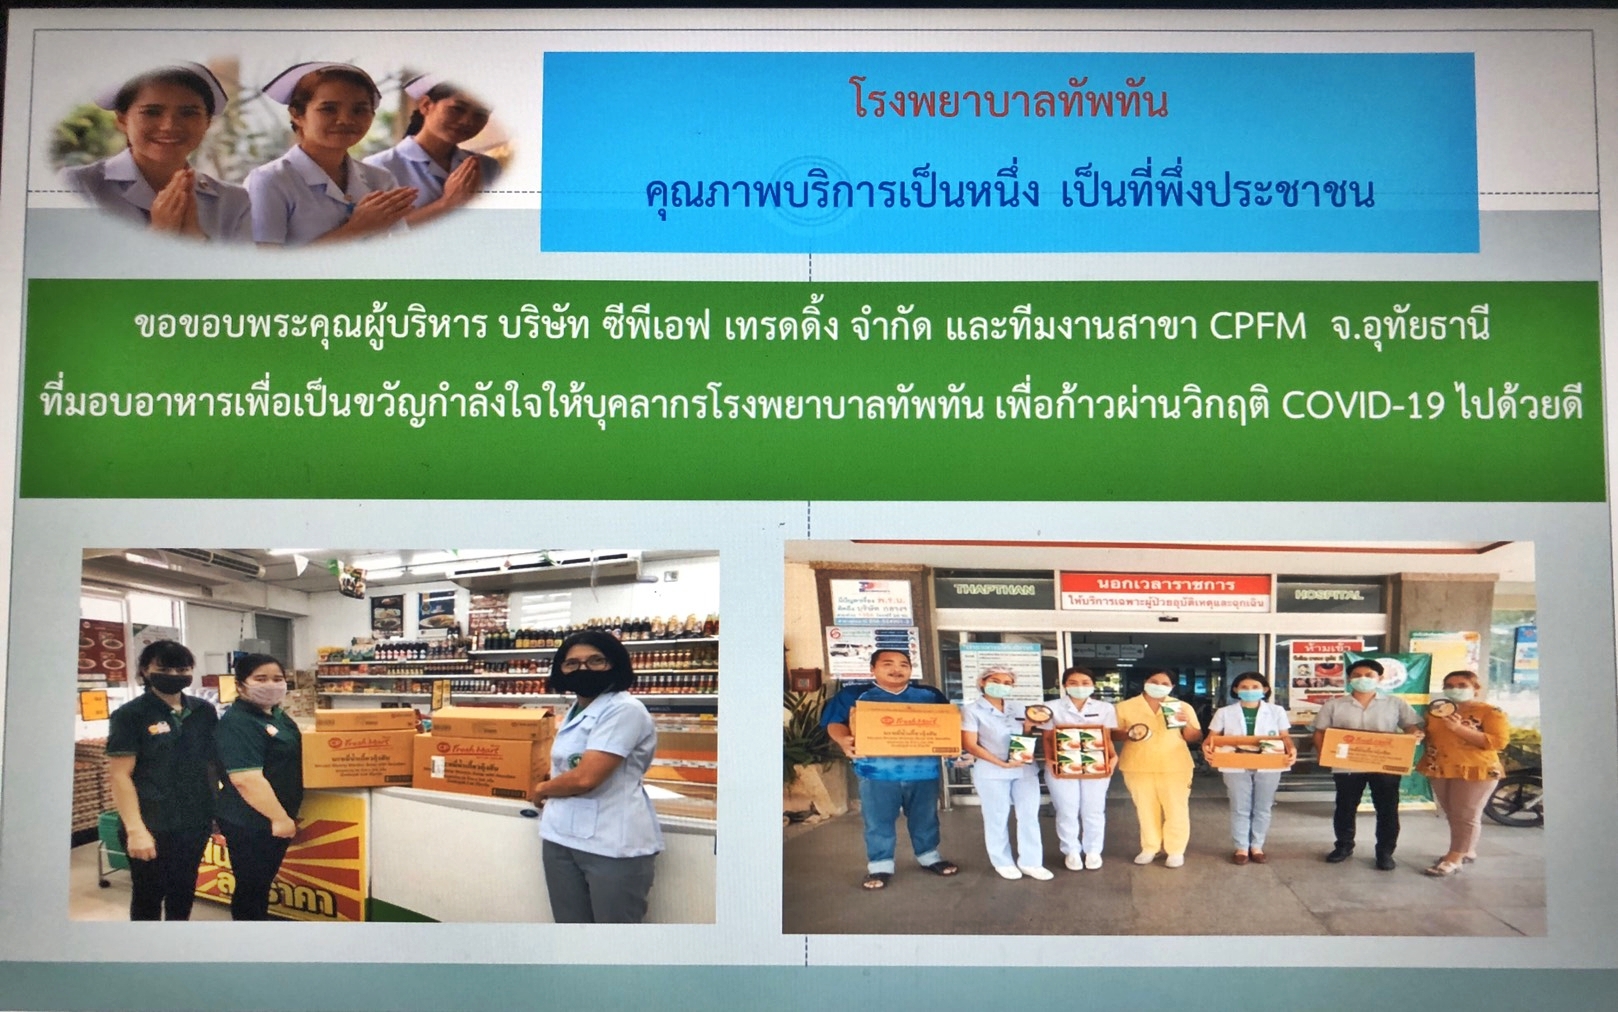 CPF ยืนหยัดเคียงข้างบุคลากรทางการแพทย์ ส่งมอบอาหารปลอดภัยให้แก่โรงพยาบาล 183 แห่งทั่วประเทศ